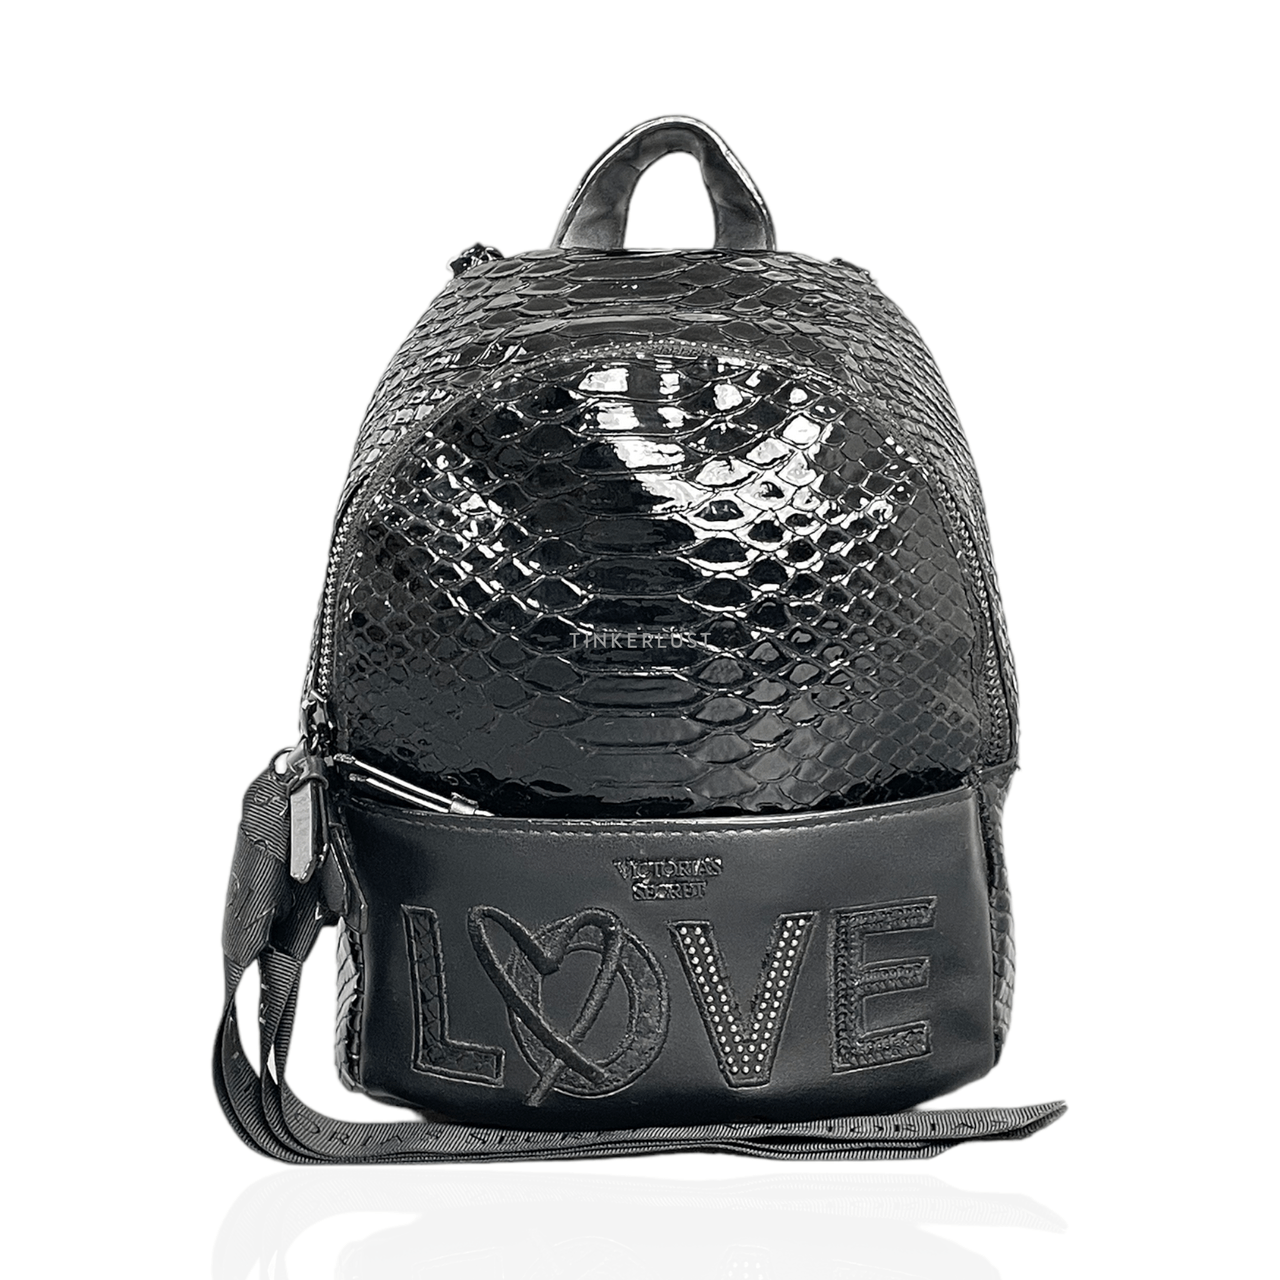 Victoria Secret Black Mini Backpack